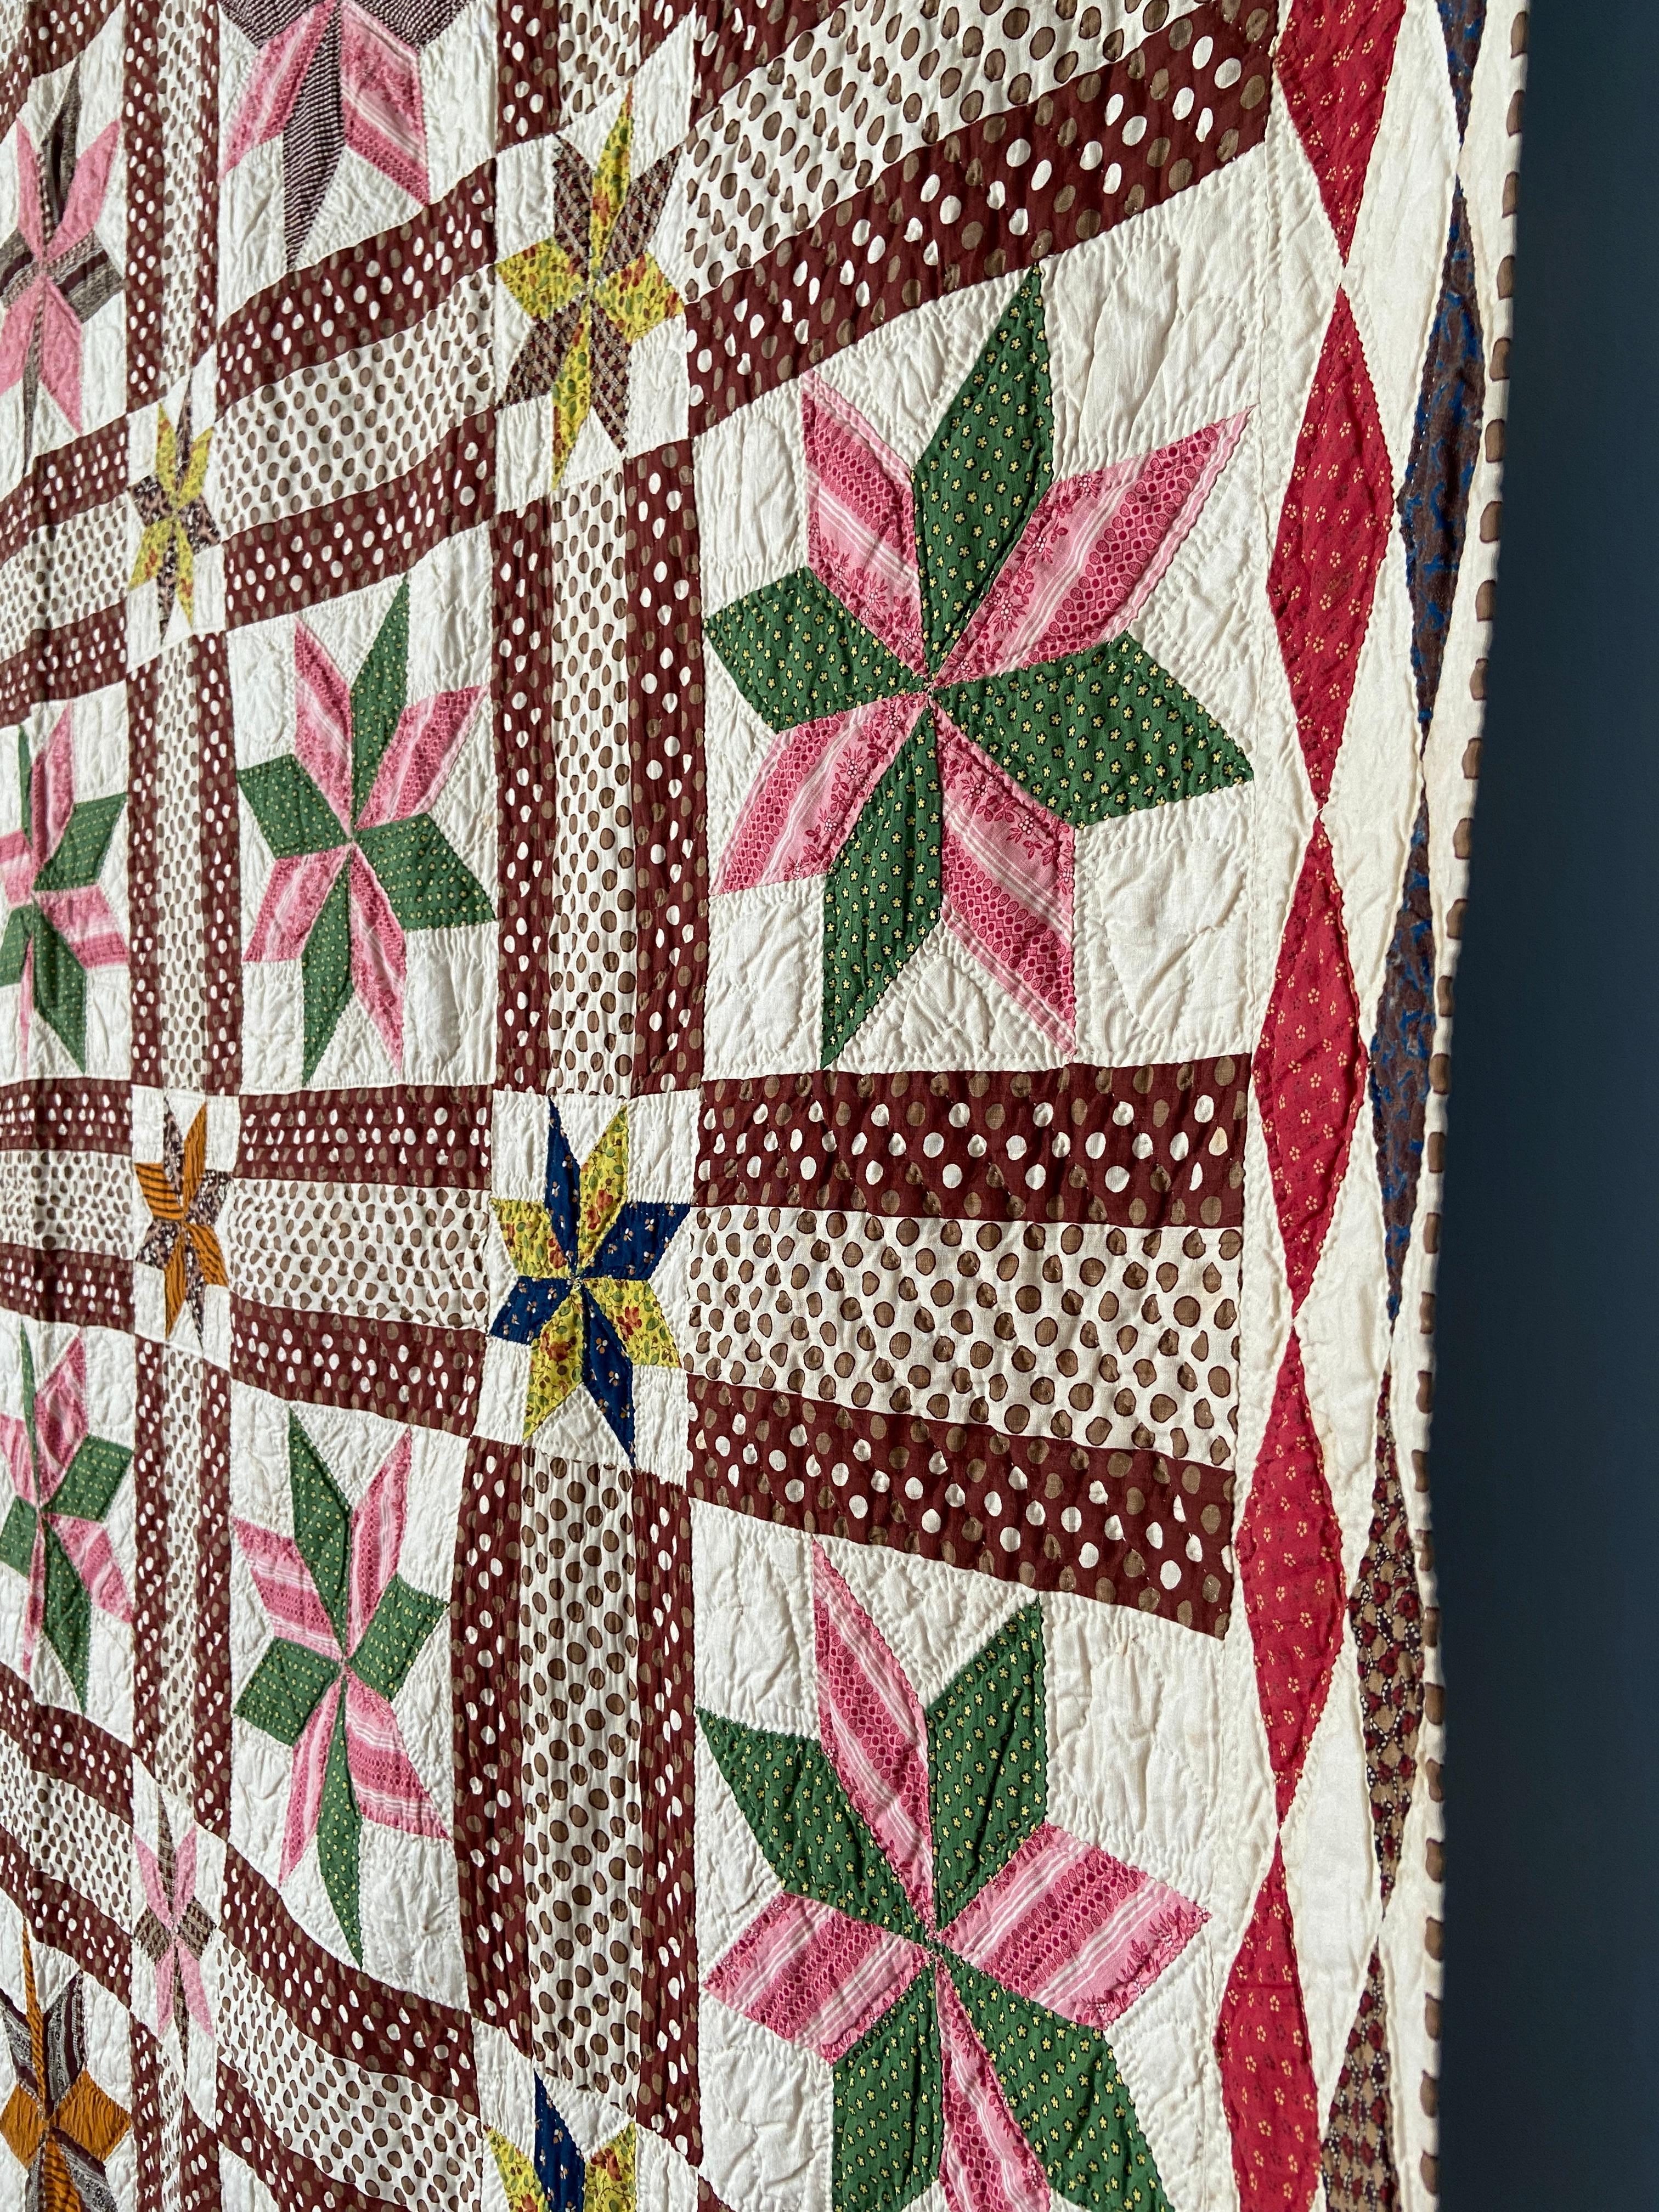 Late 19th Century Antique Handmade Patchwork Quilt 